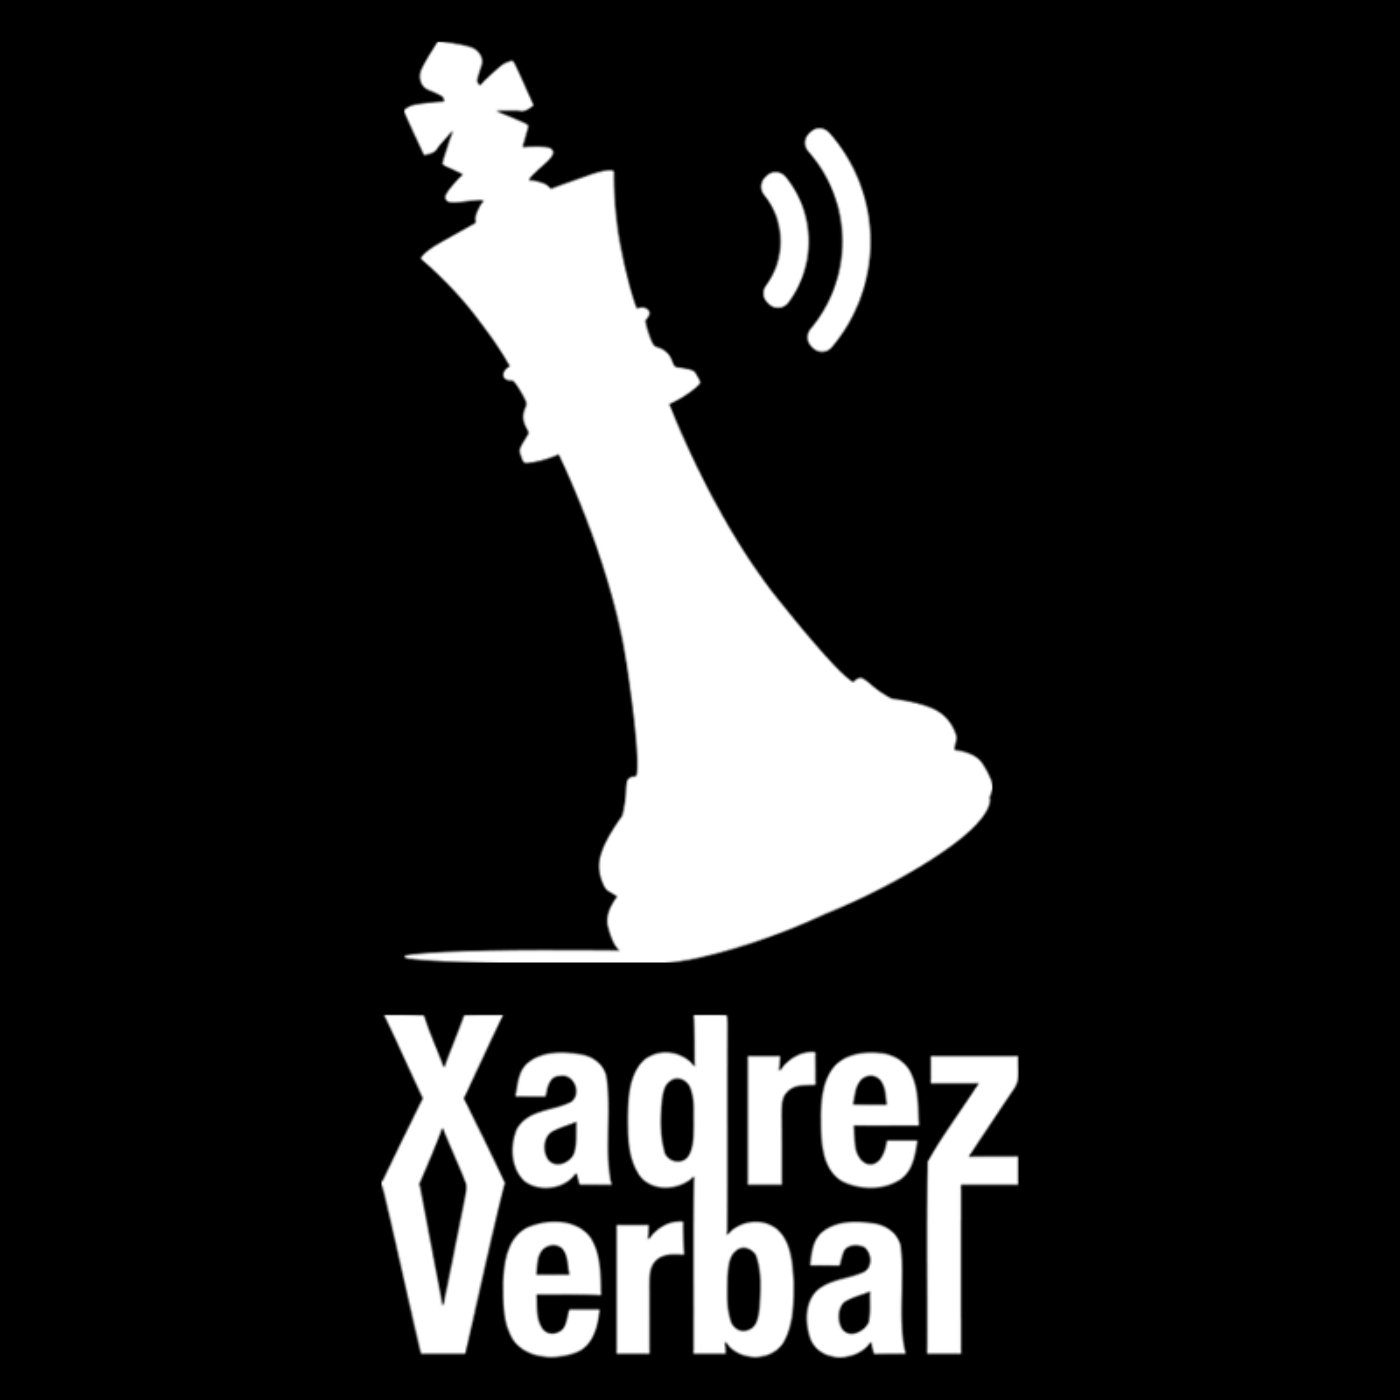 Logotipo Xadrez Verbal